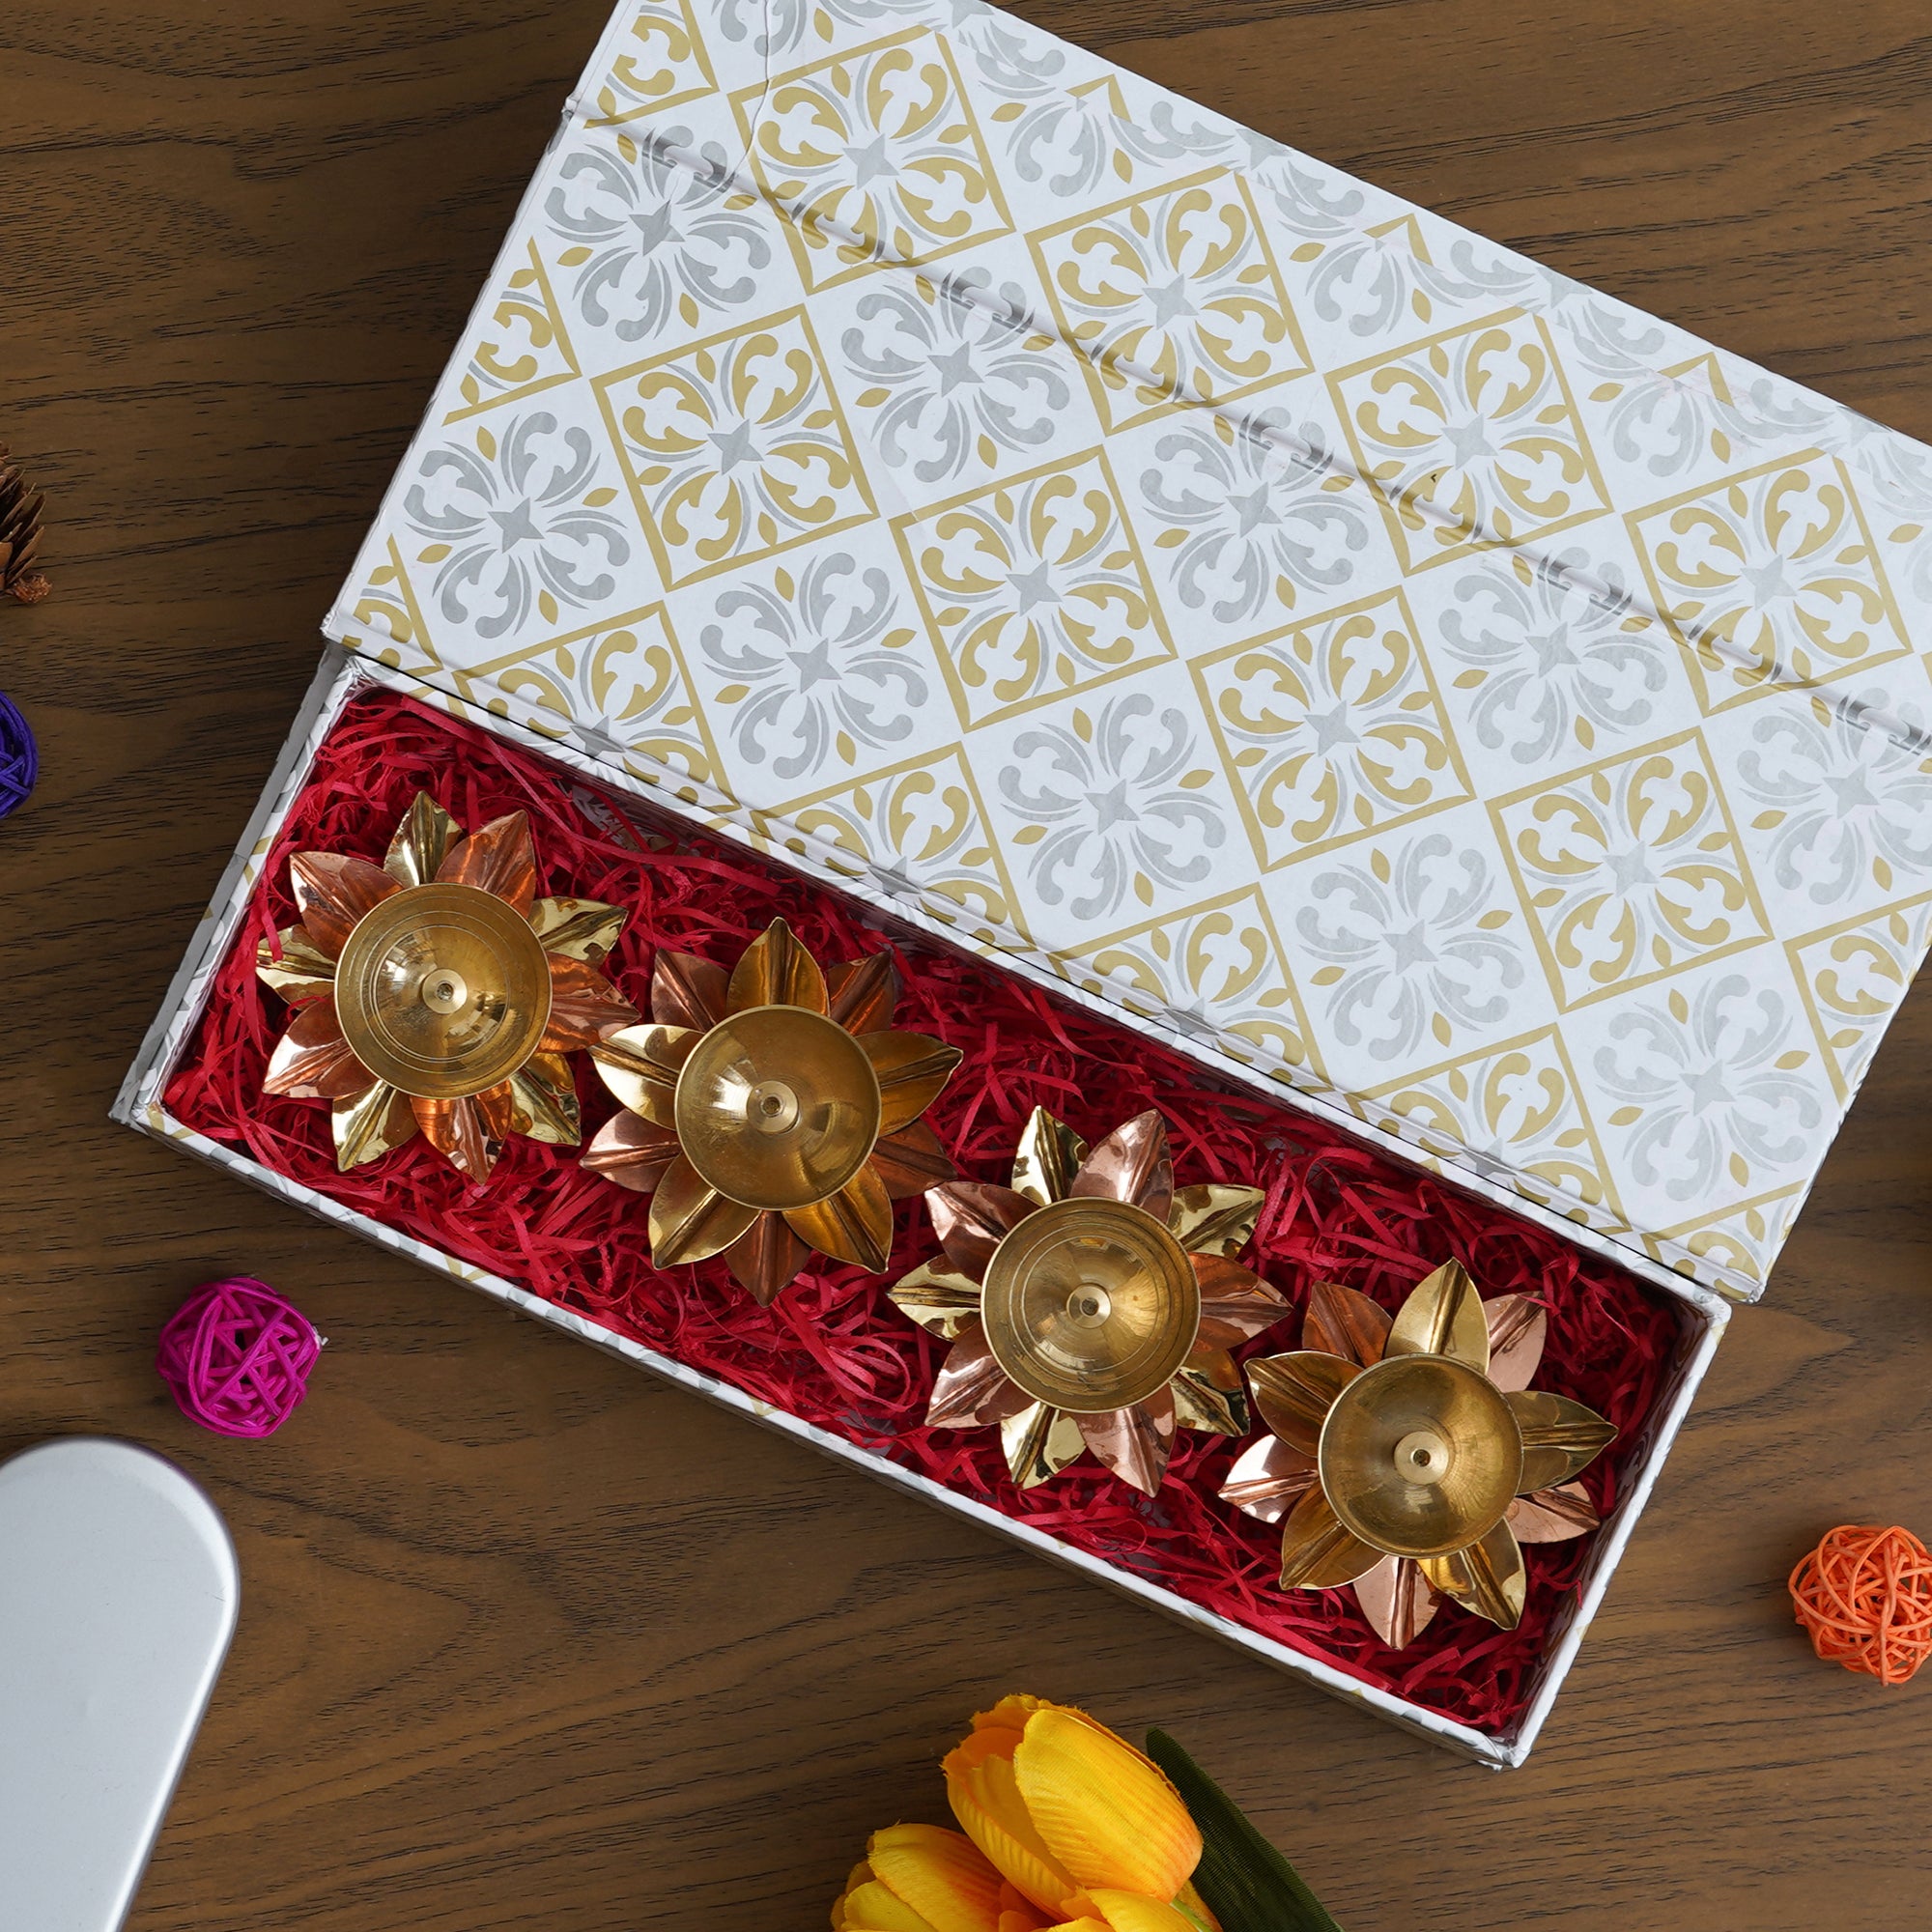 eCraftIndia Lotus Deepam Gift Box - Set of 4 Metal Handcrafted Golden Lotus Flower Shape Decorative Diyas